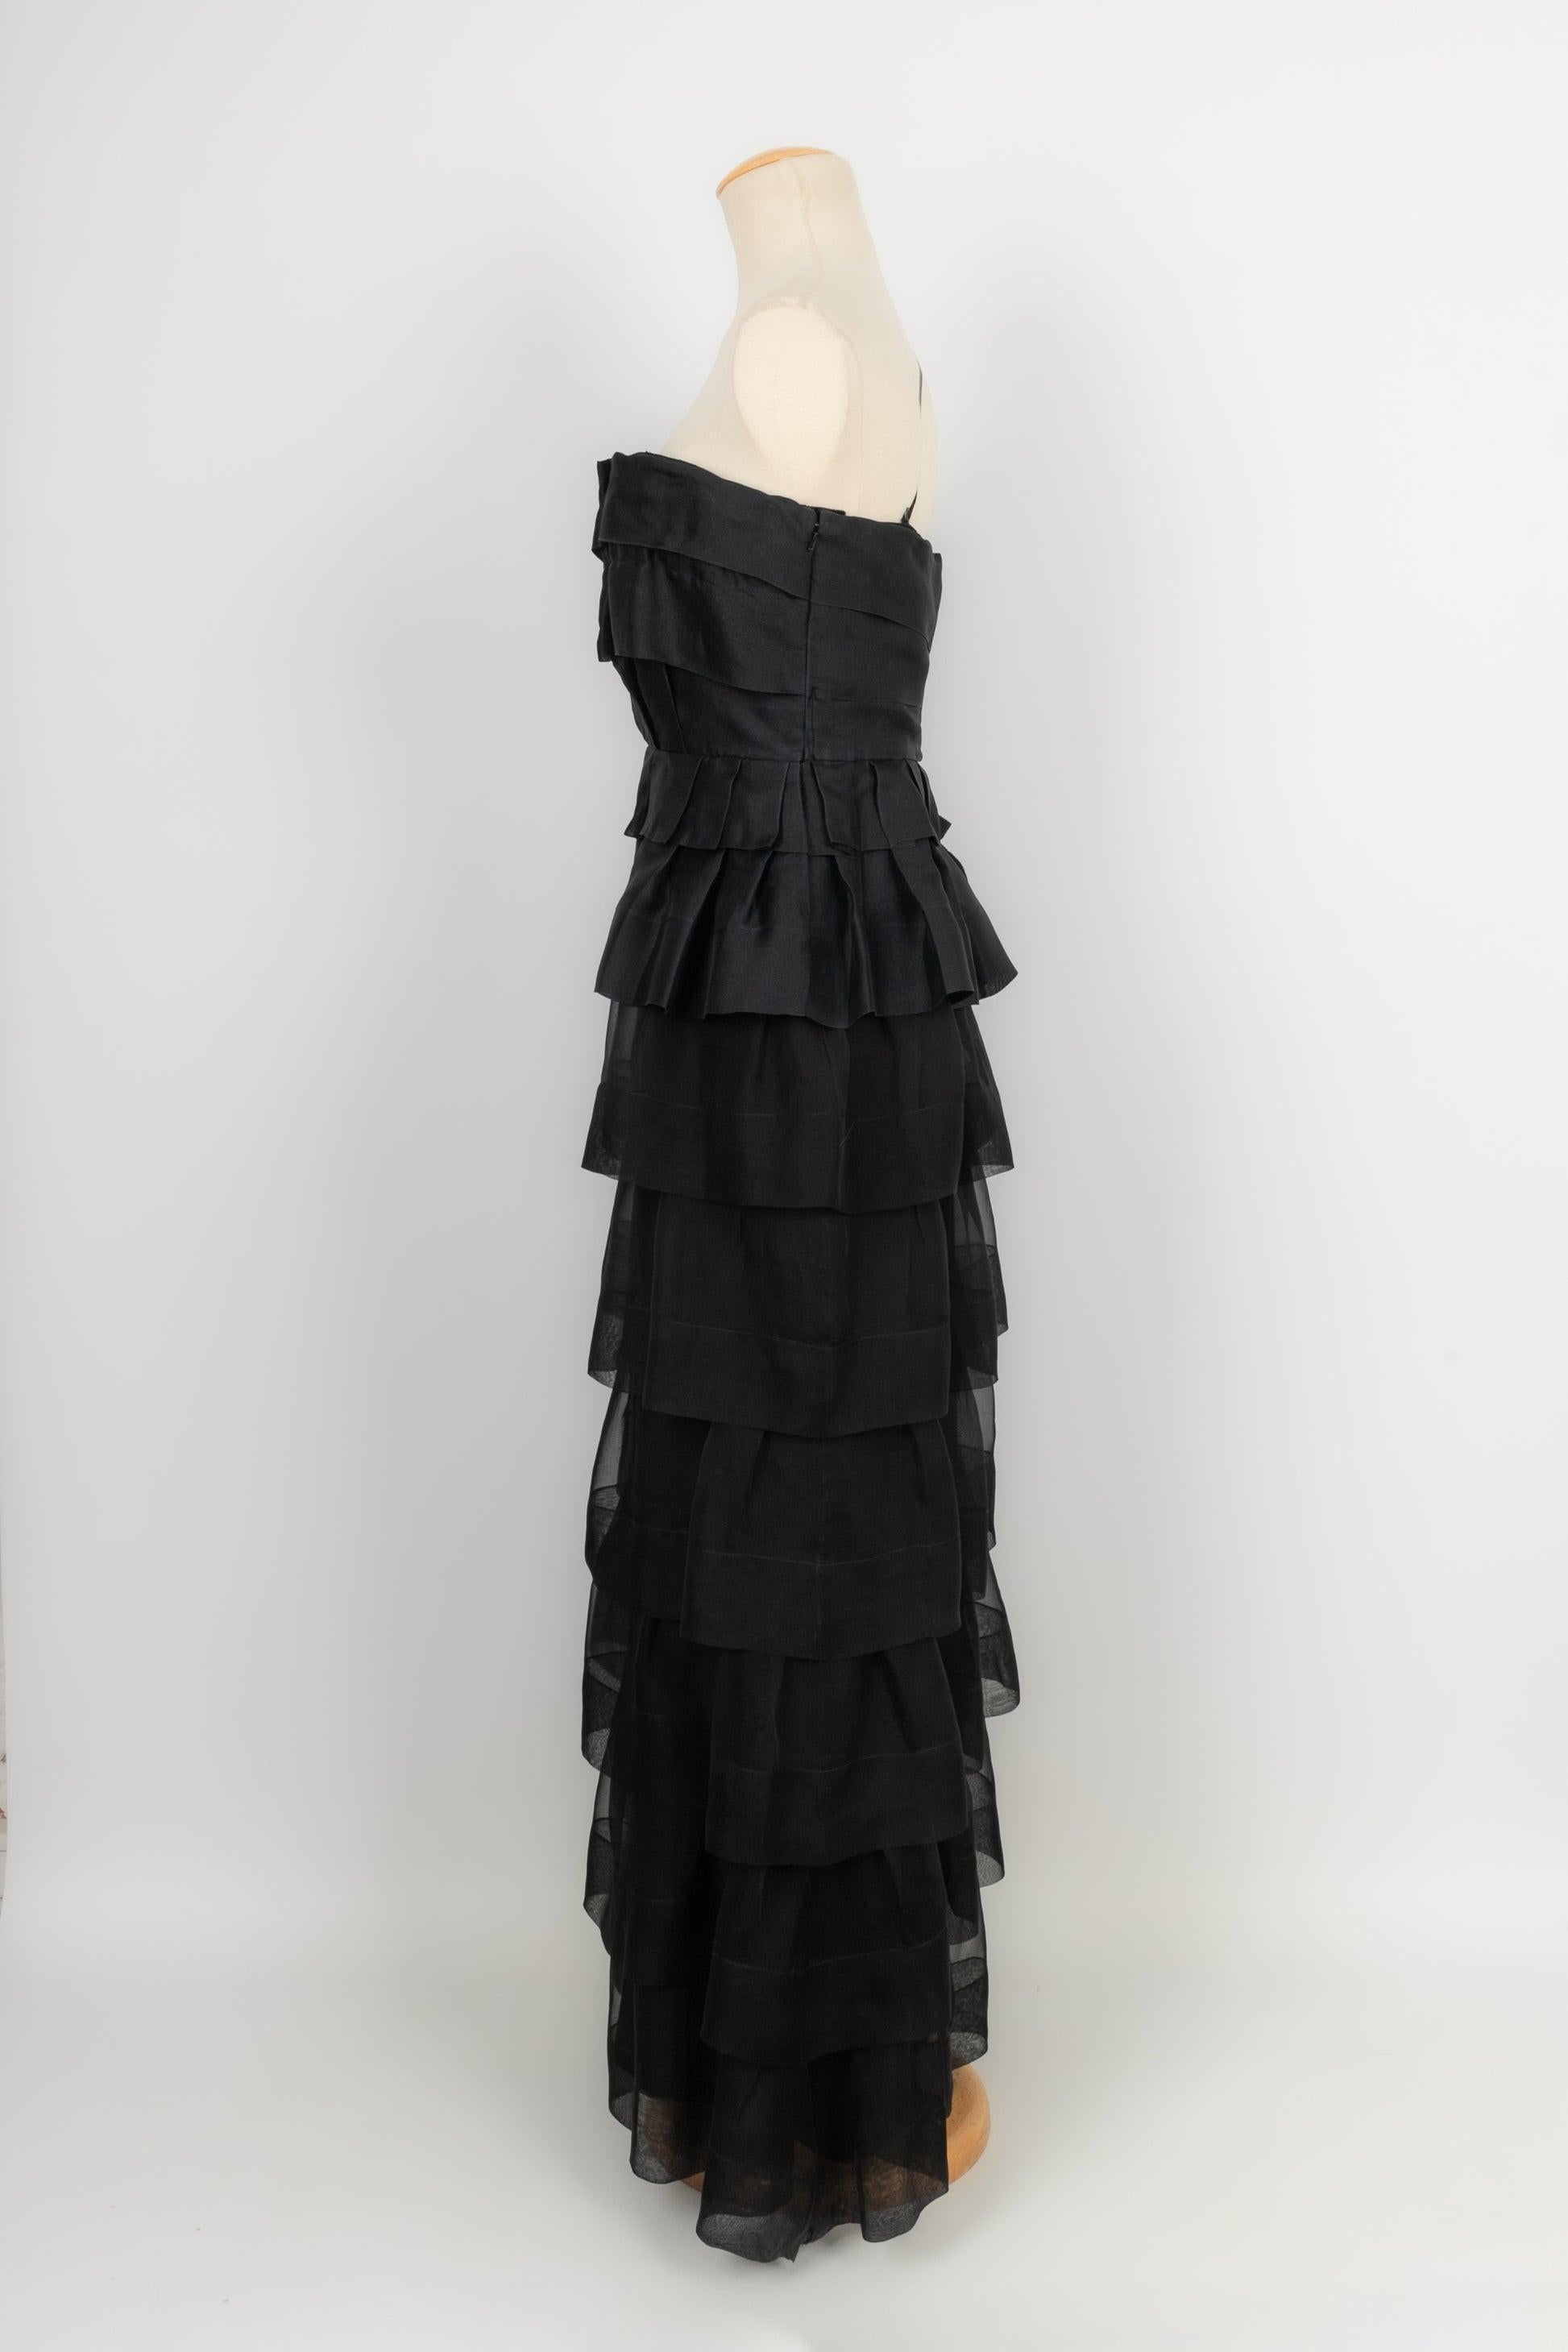 Christian Dior Black Silk Flounced Bustier Dress 42FR, 2009 2